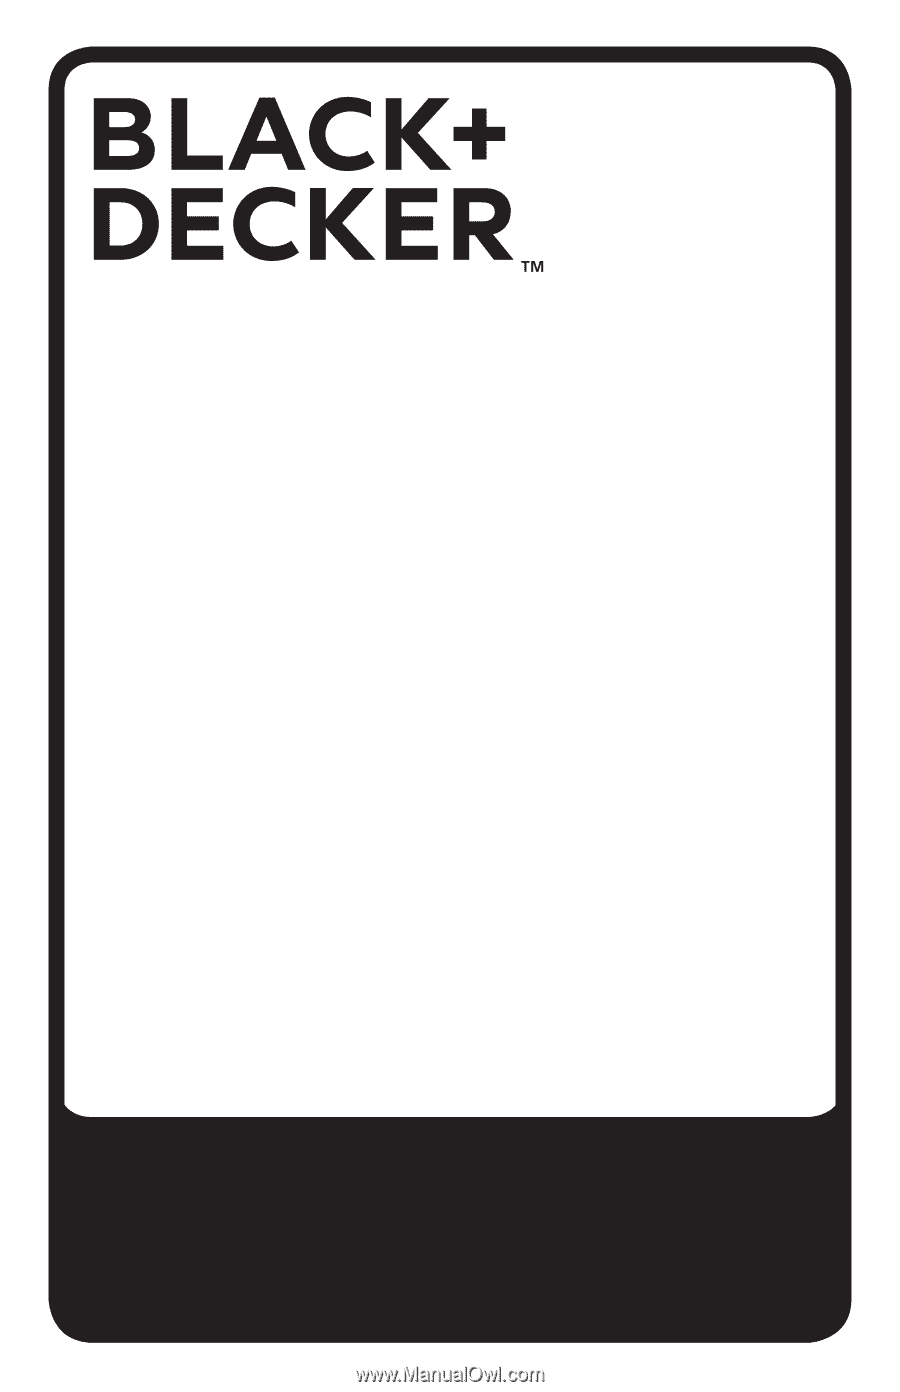 BLACK+DECKER BESTA512CM Instruction manual